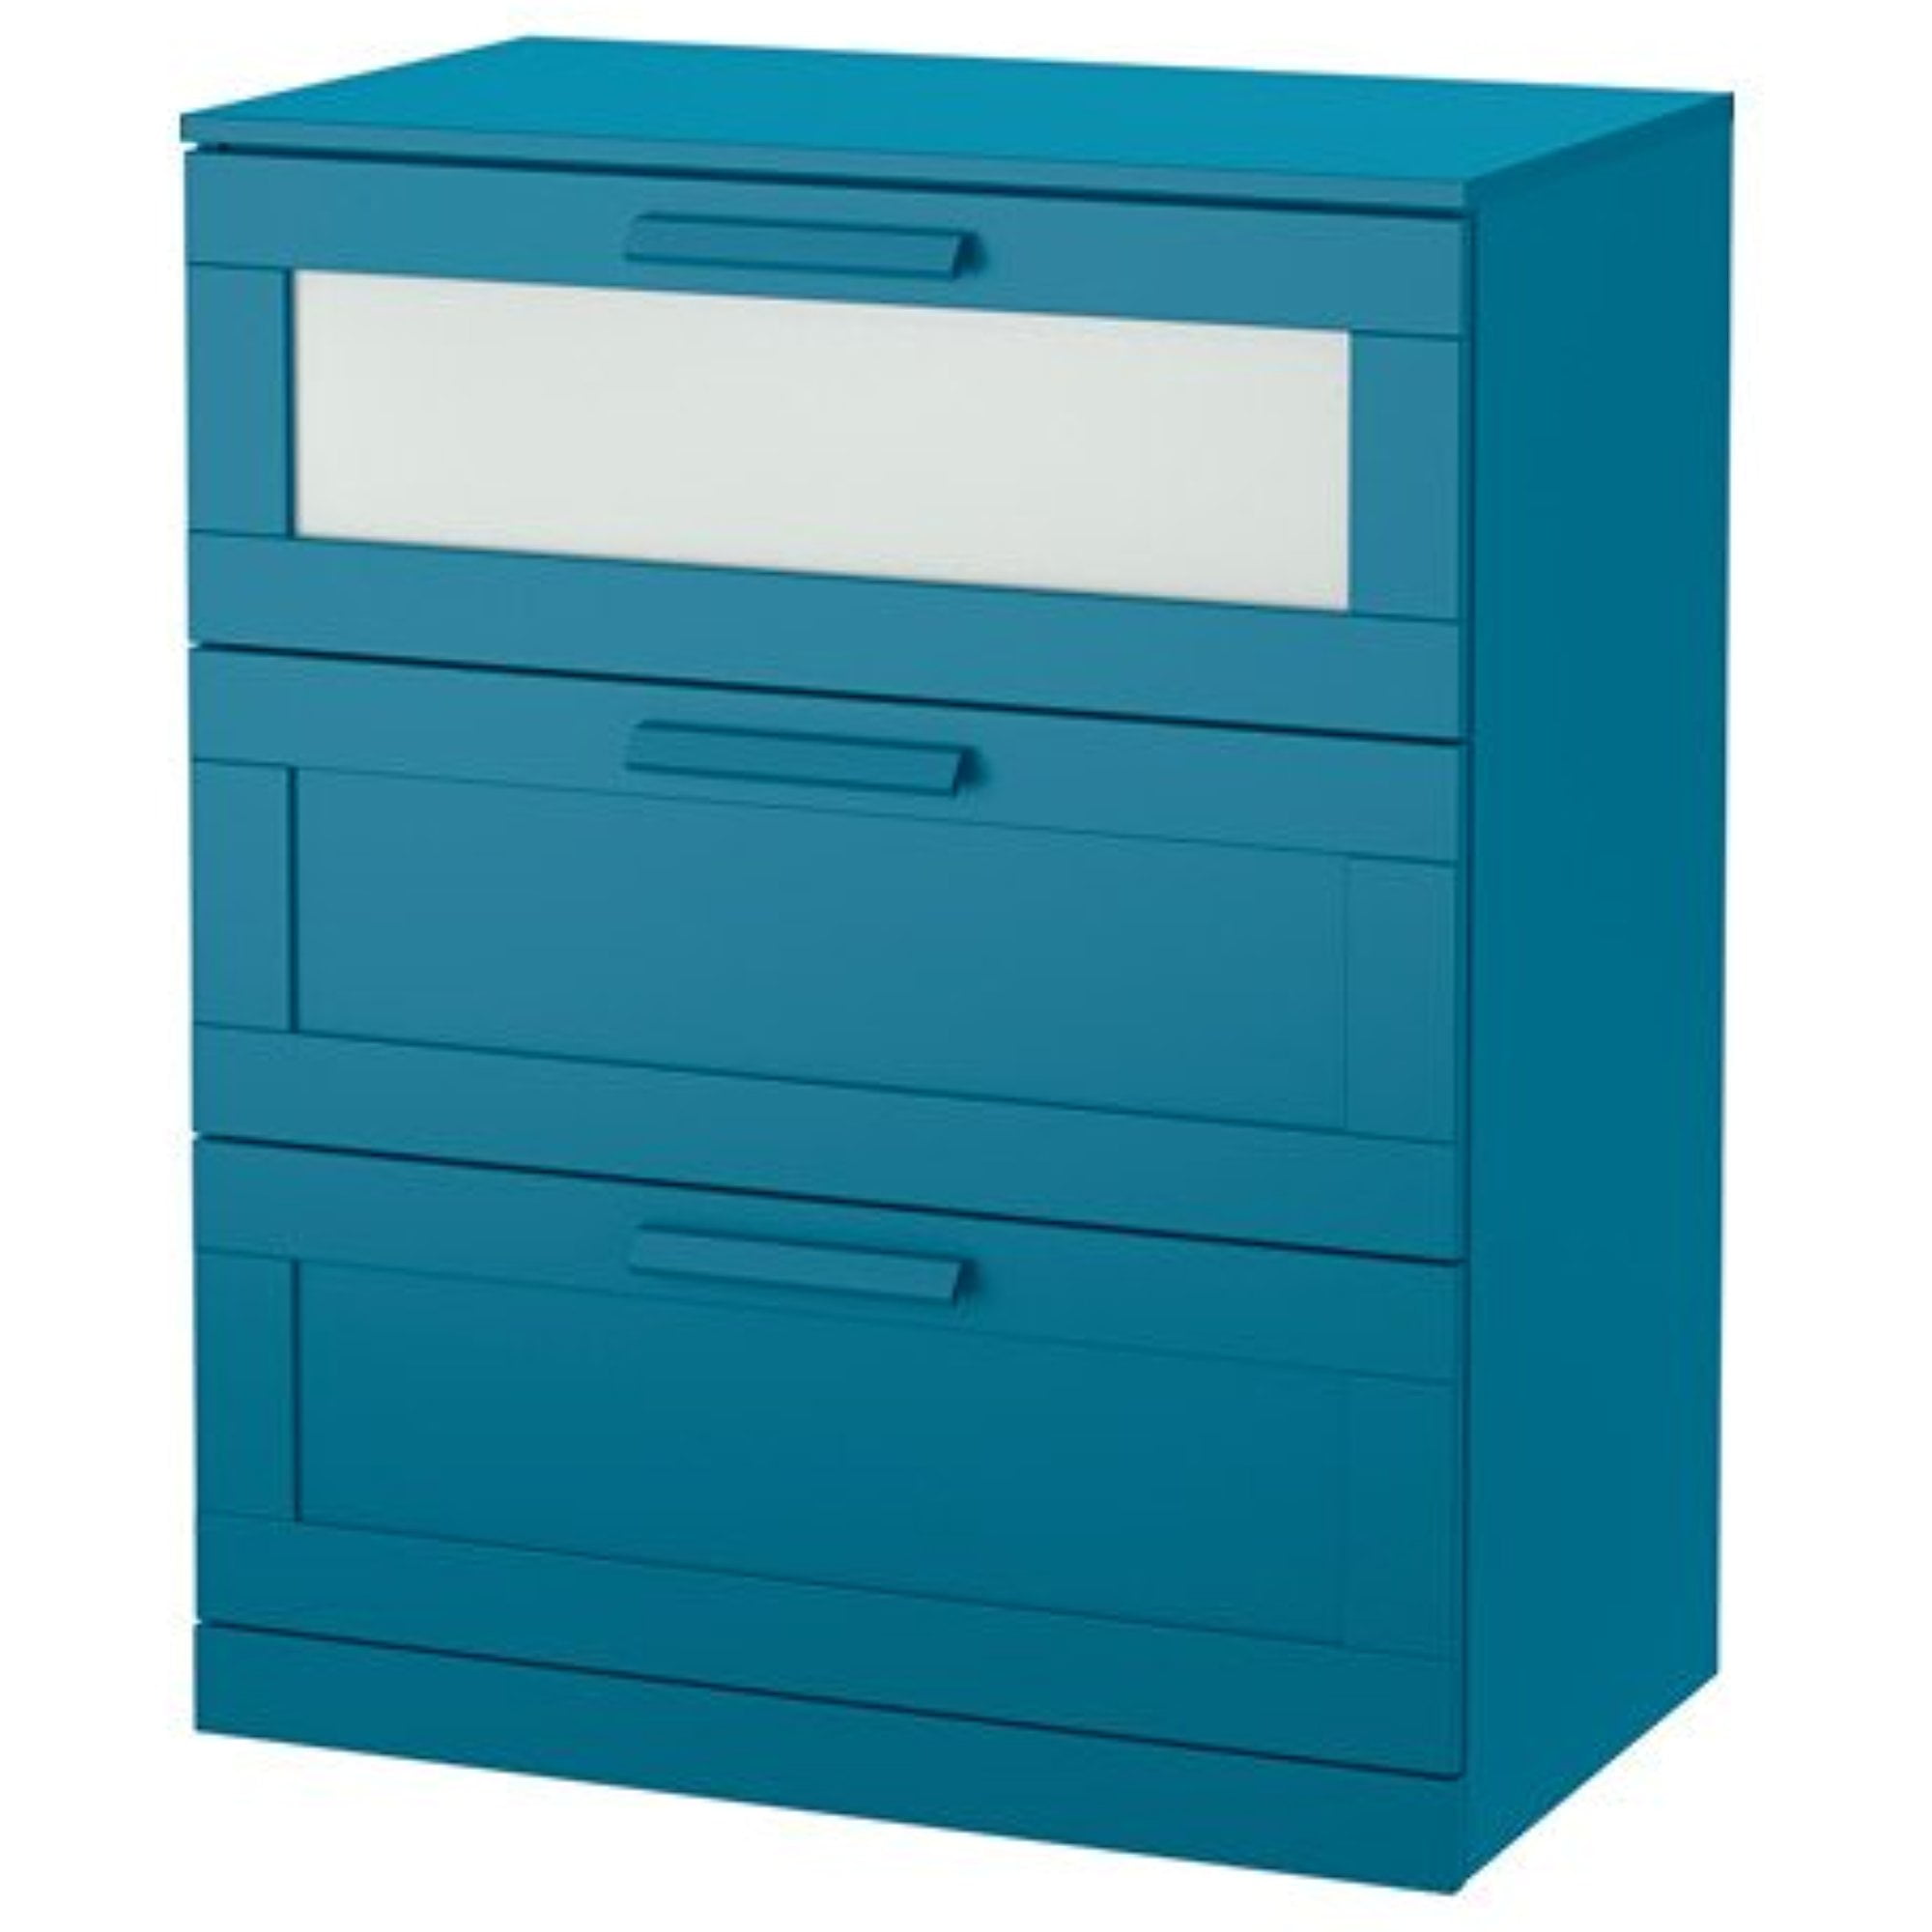 Ikea 3 Drawer Chest Dark Green Blue, Ikea Dresser With See Through Drawers